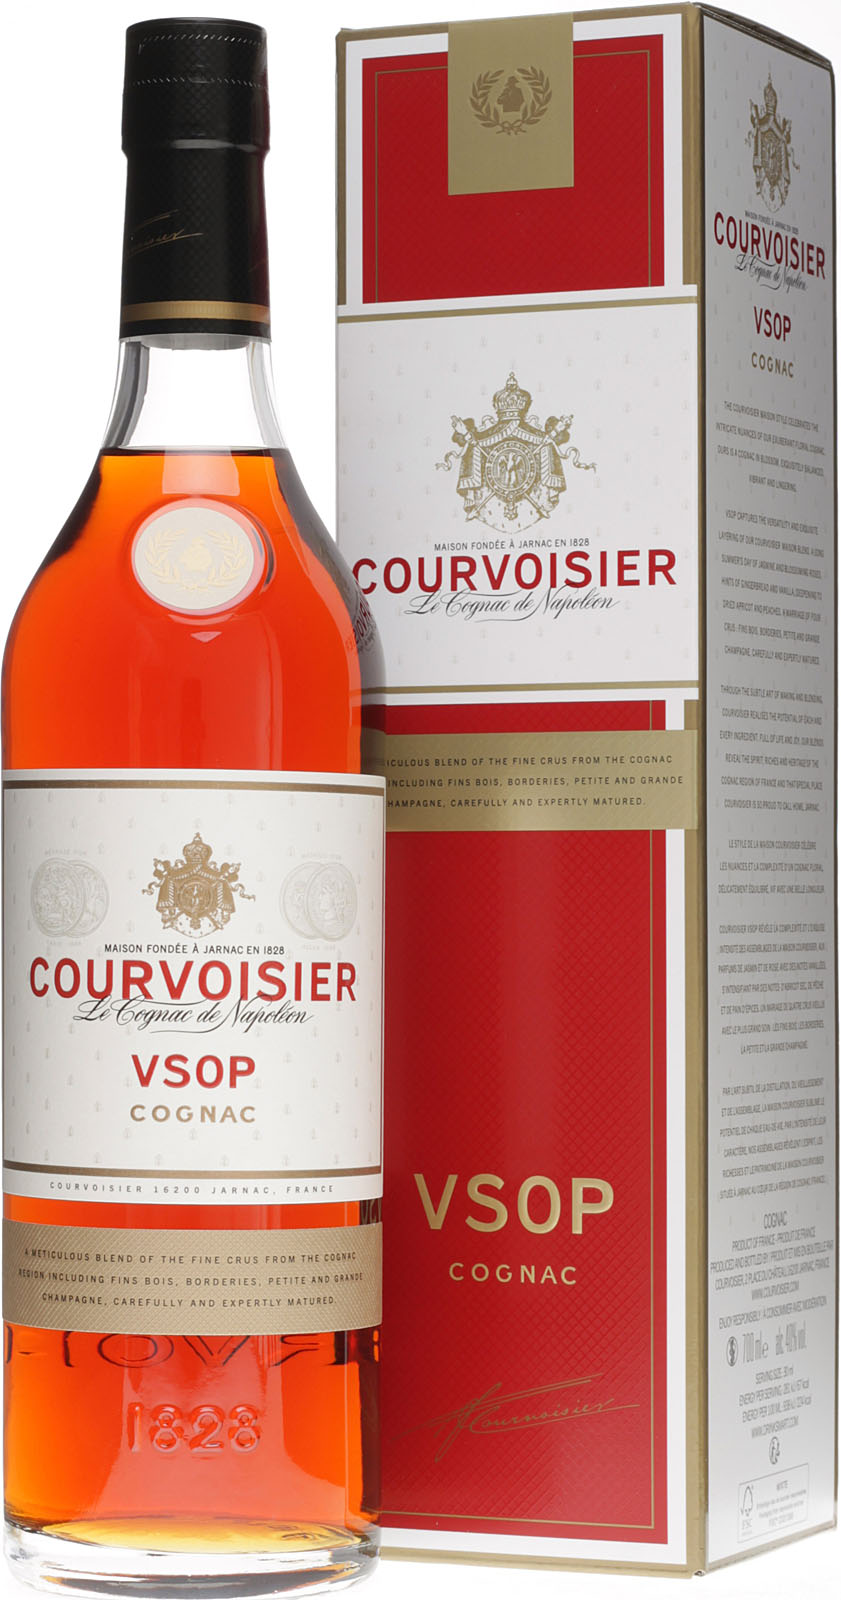 Courvoisier im Shop V.S.O.P. Cognac